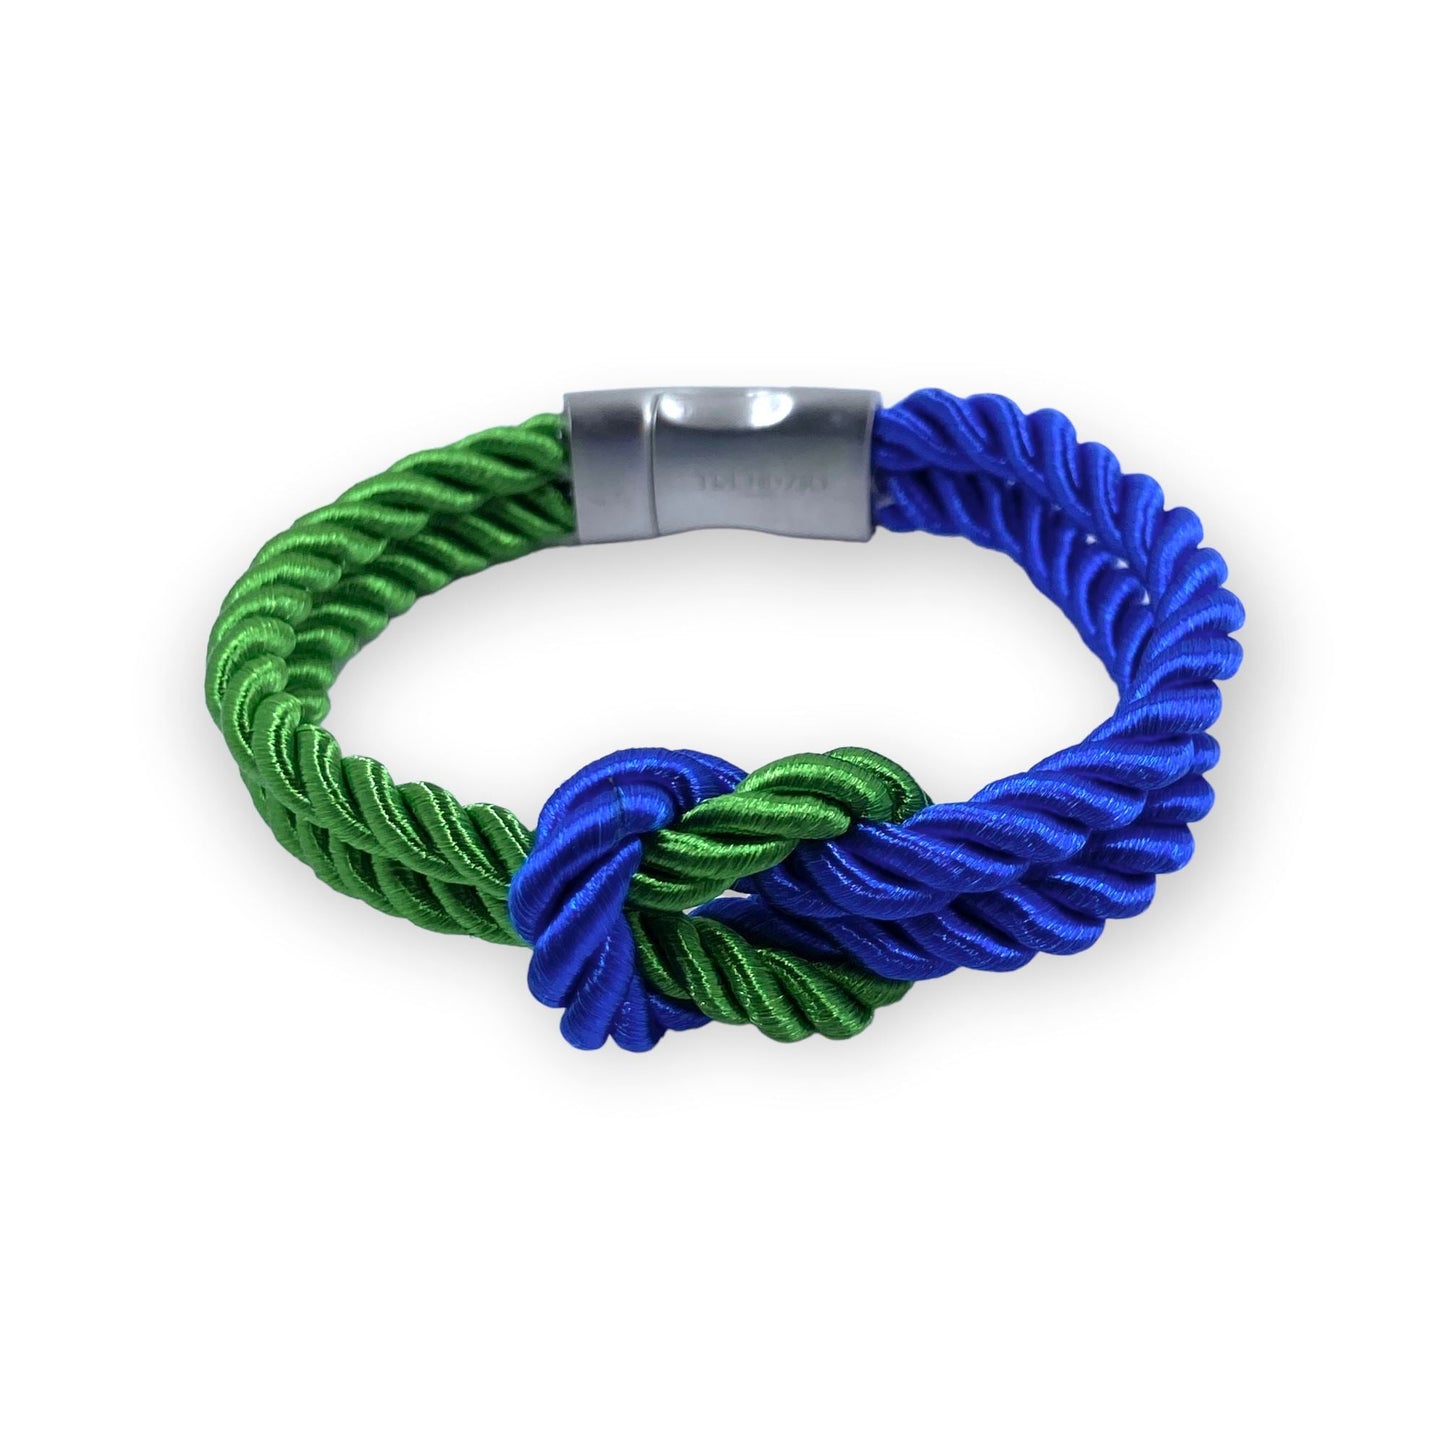 The Original Love Knot Satin Rope Bracelet Green and Blue Bracelets Trendzio Green and Blue 